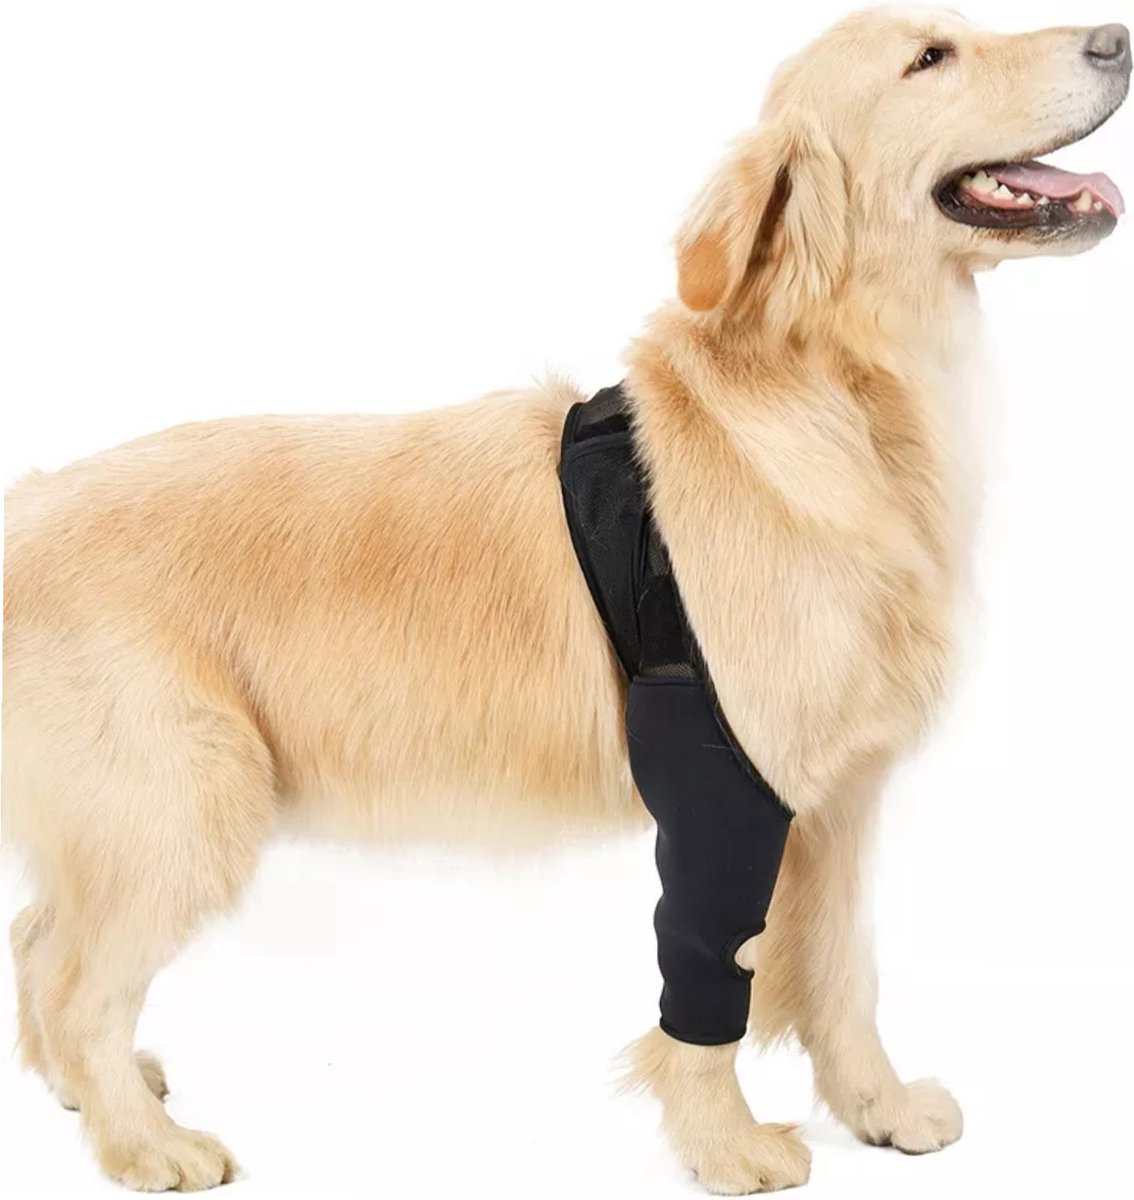 Hondbrace, Hond ondersteuning, dogs braces, hond bandage, honden brace, halsband, harnas, hond knee pad support, hond protector maat L.